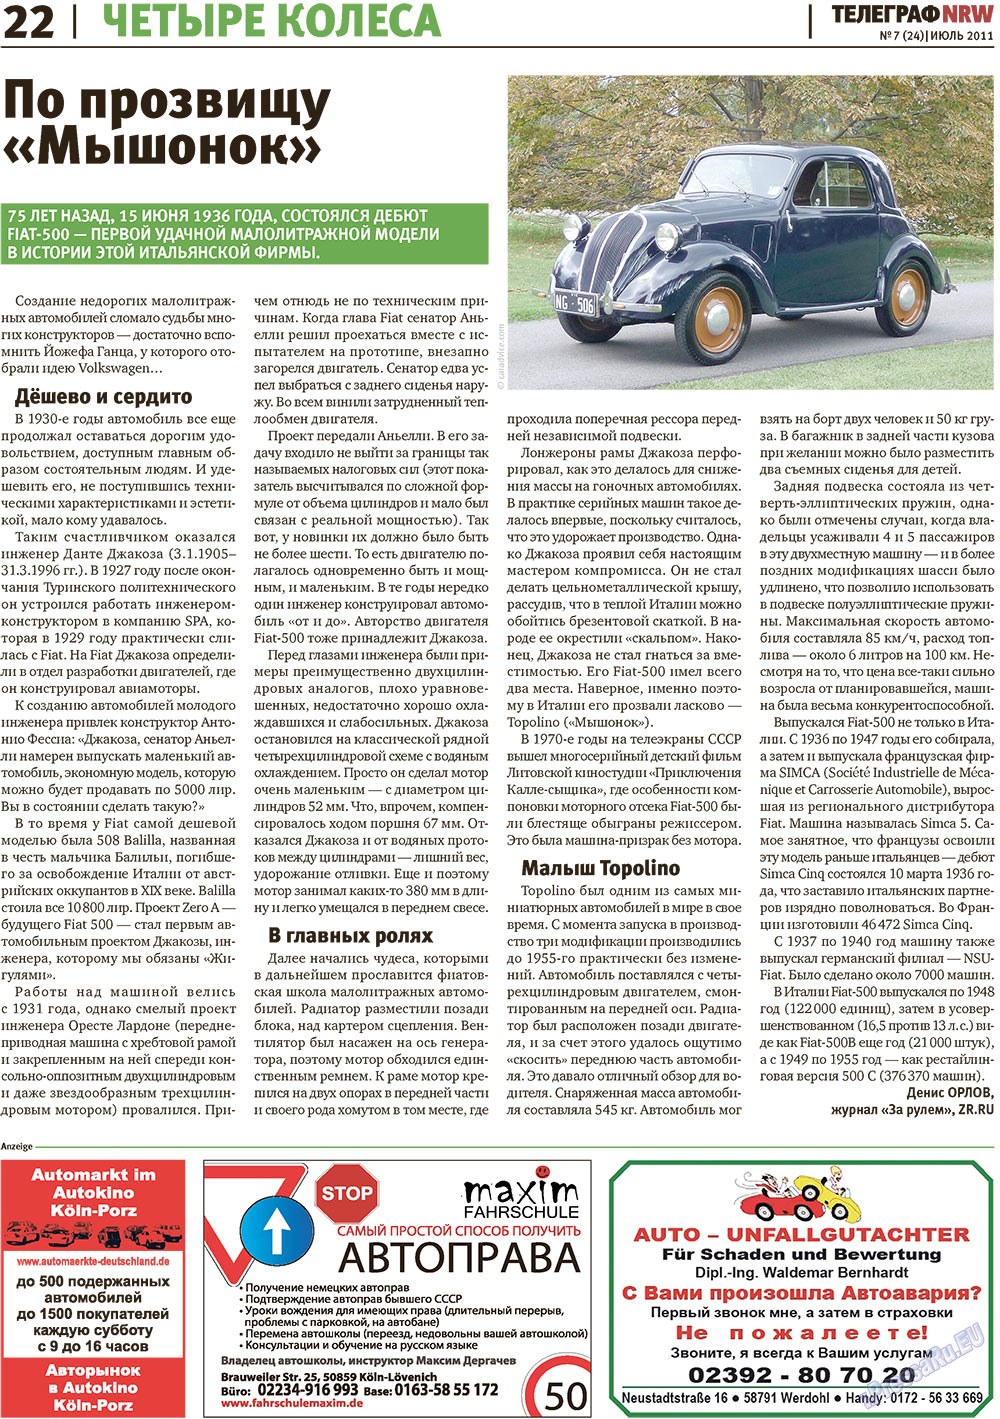 Телеграф NRW, газета. 2011 №7 стр.22